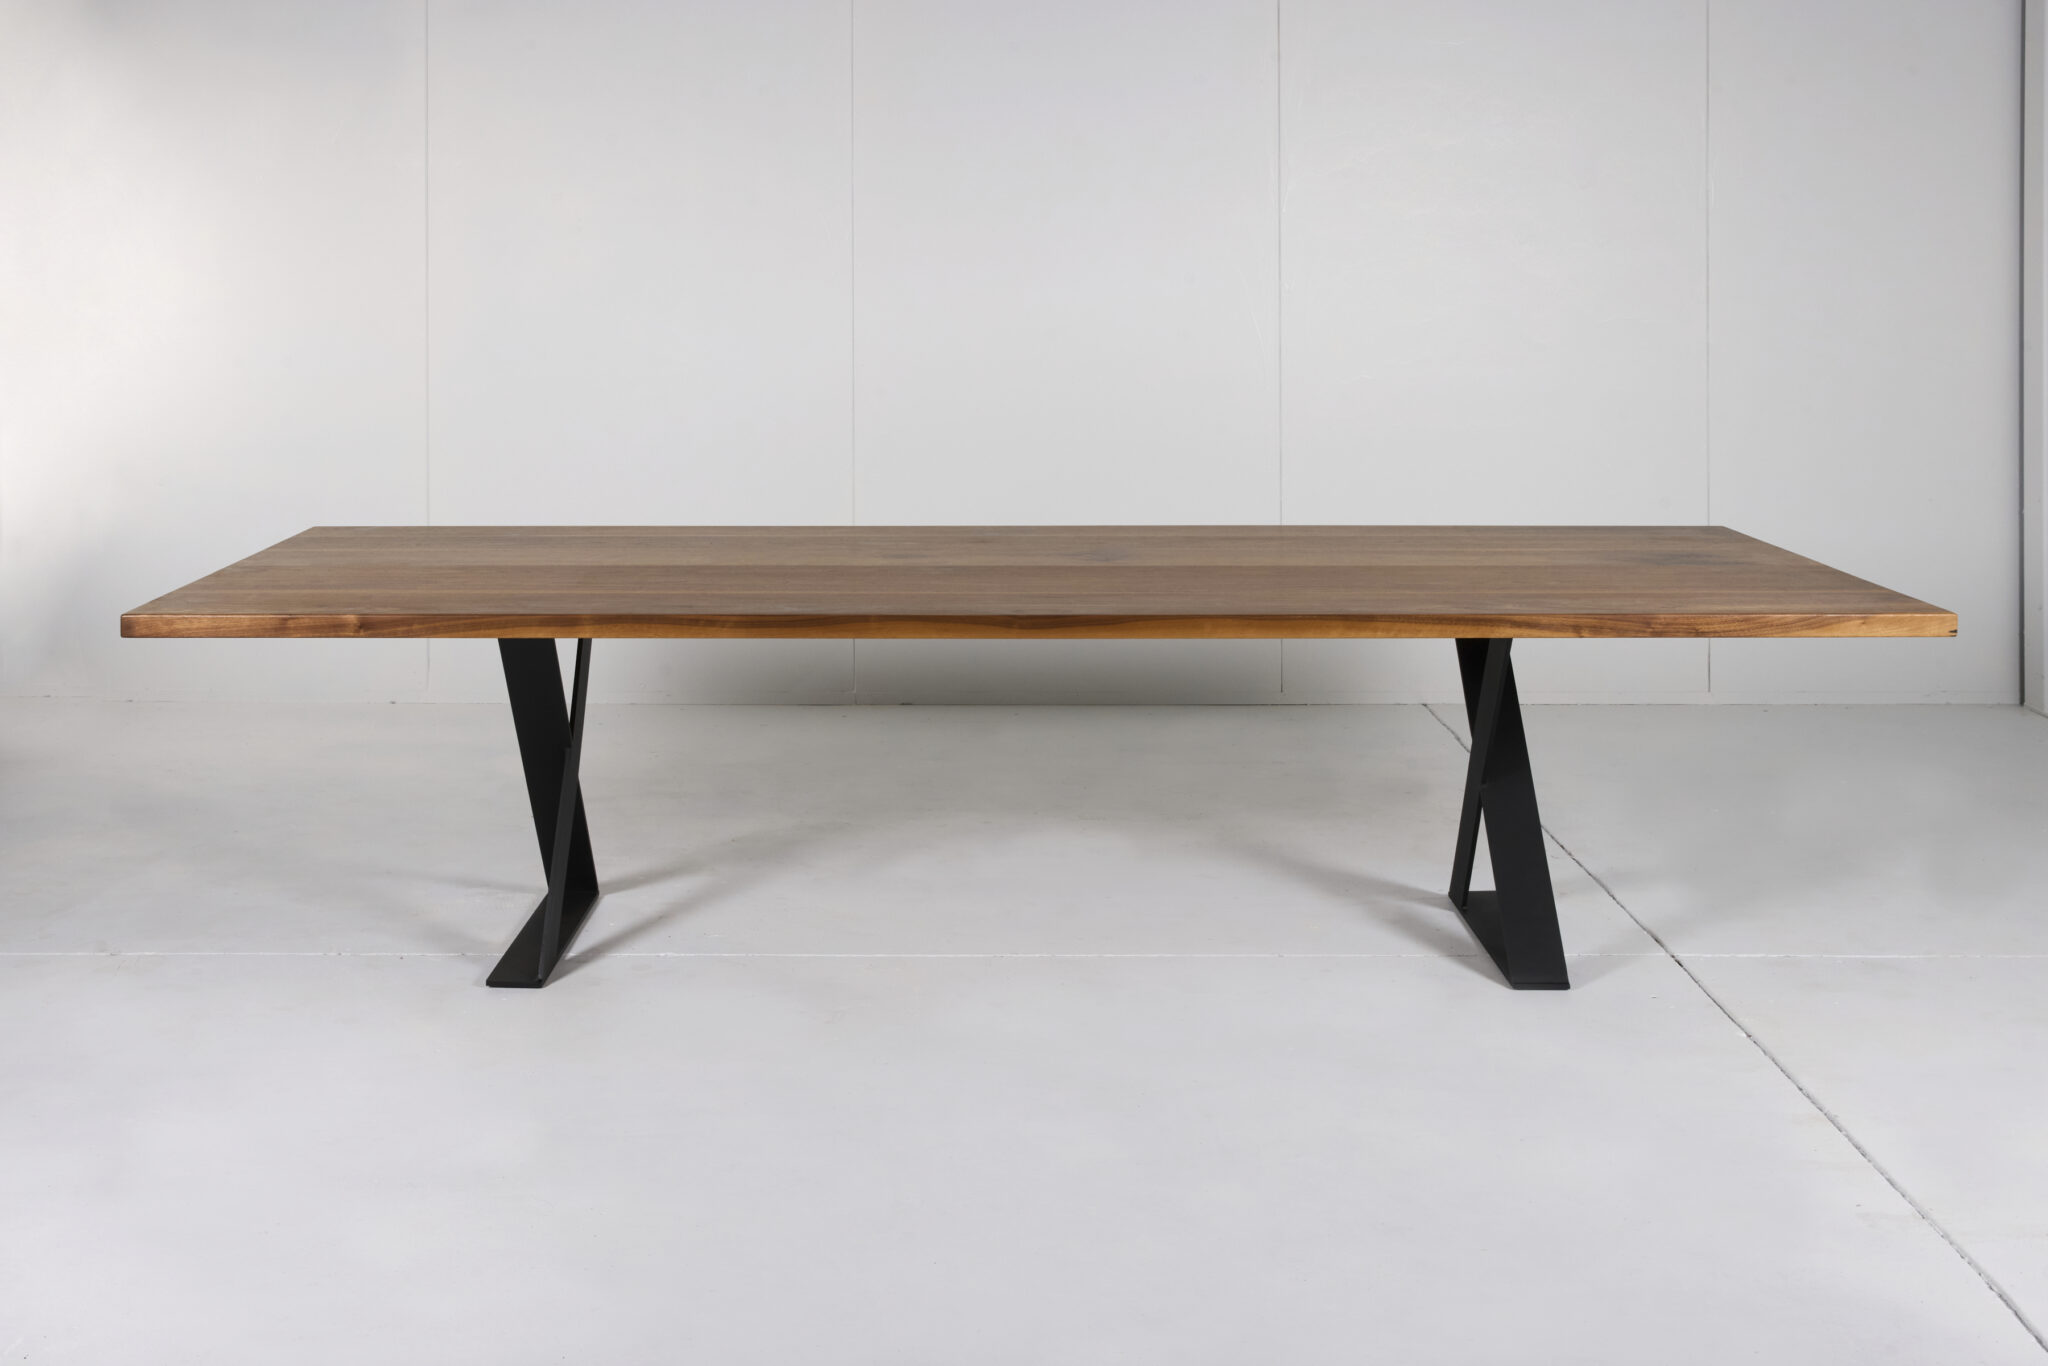 Image of Ballarat Dining Table by Arranmore Furniture showcasing its sleek X Leg design in a modern dining setting